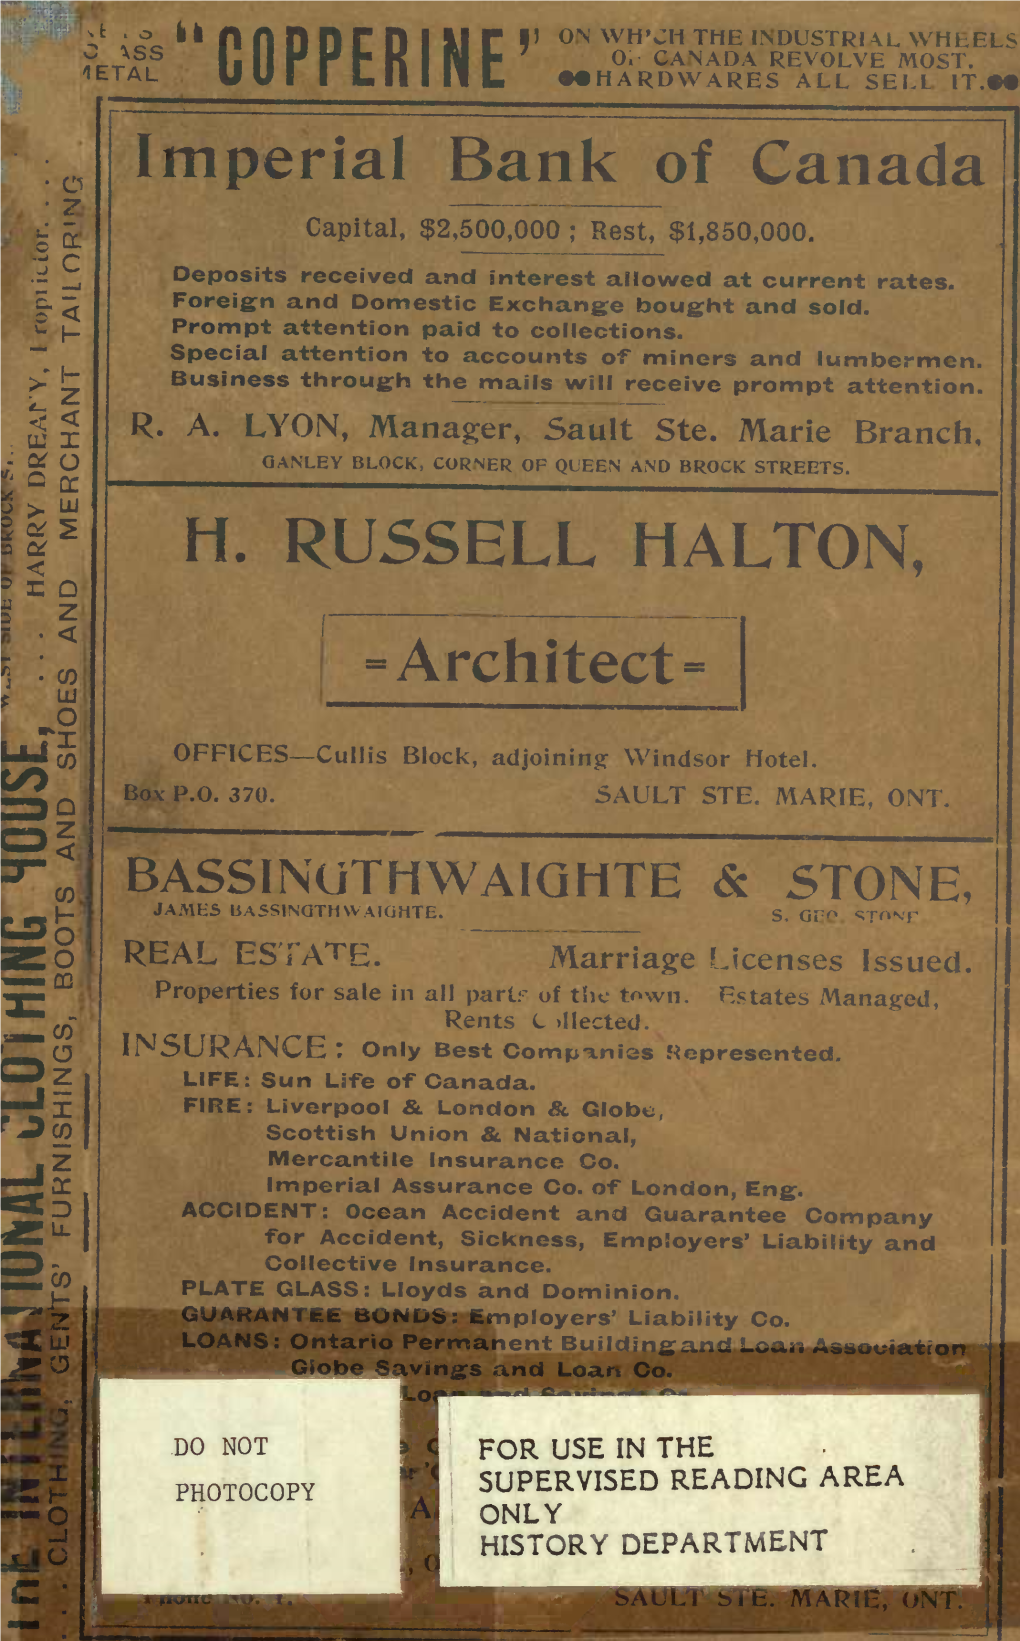 H. Russell Halton